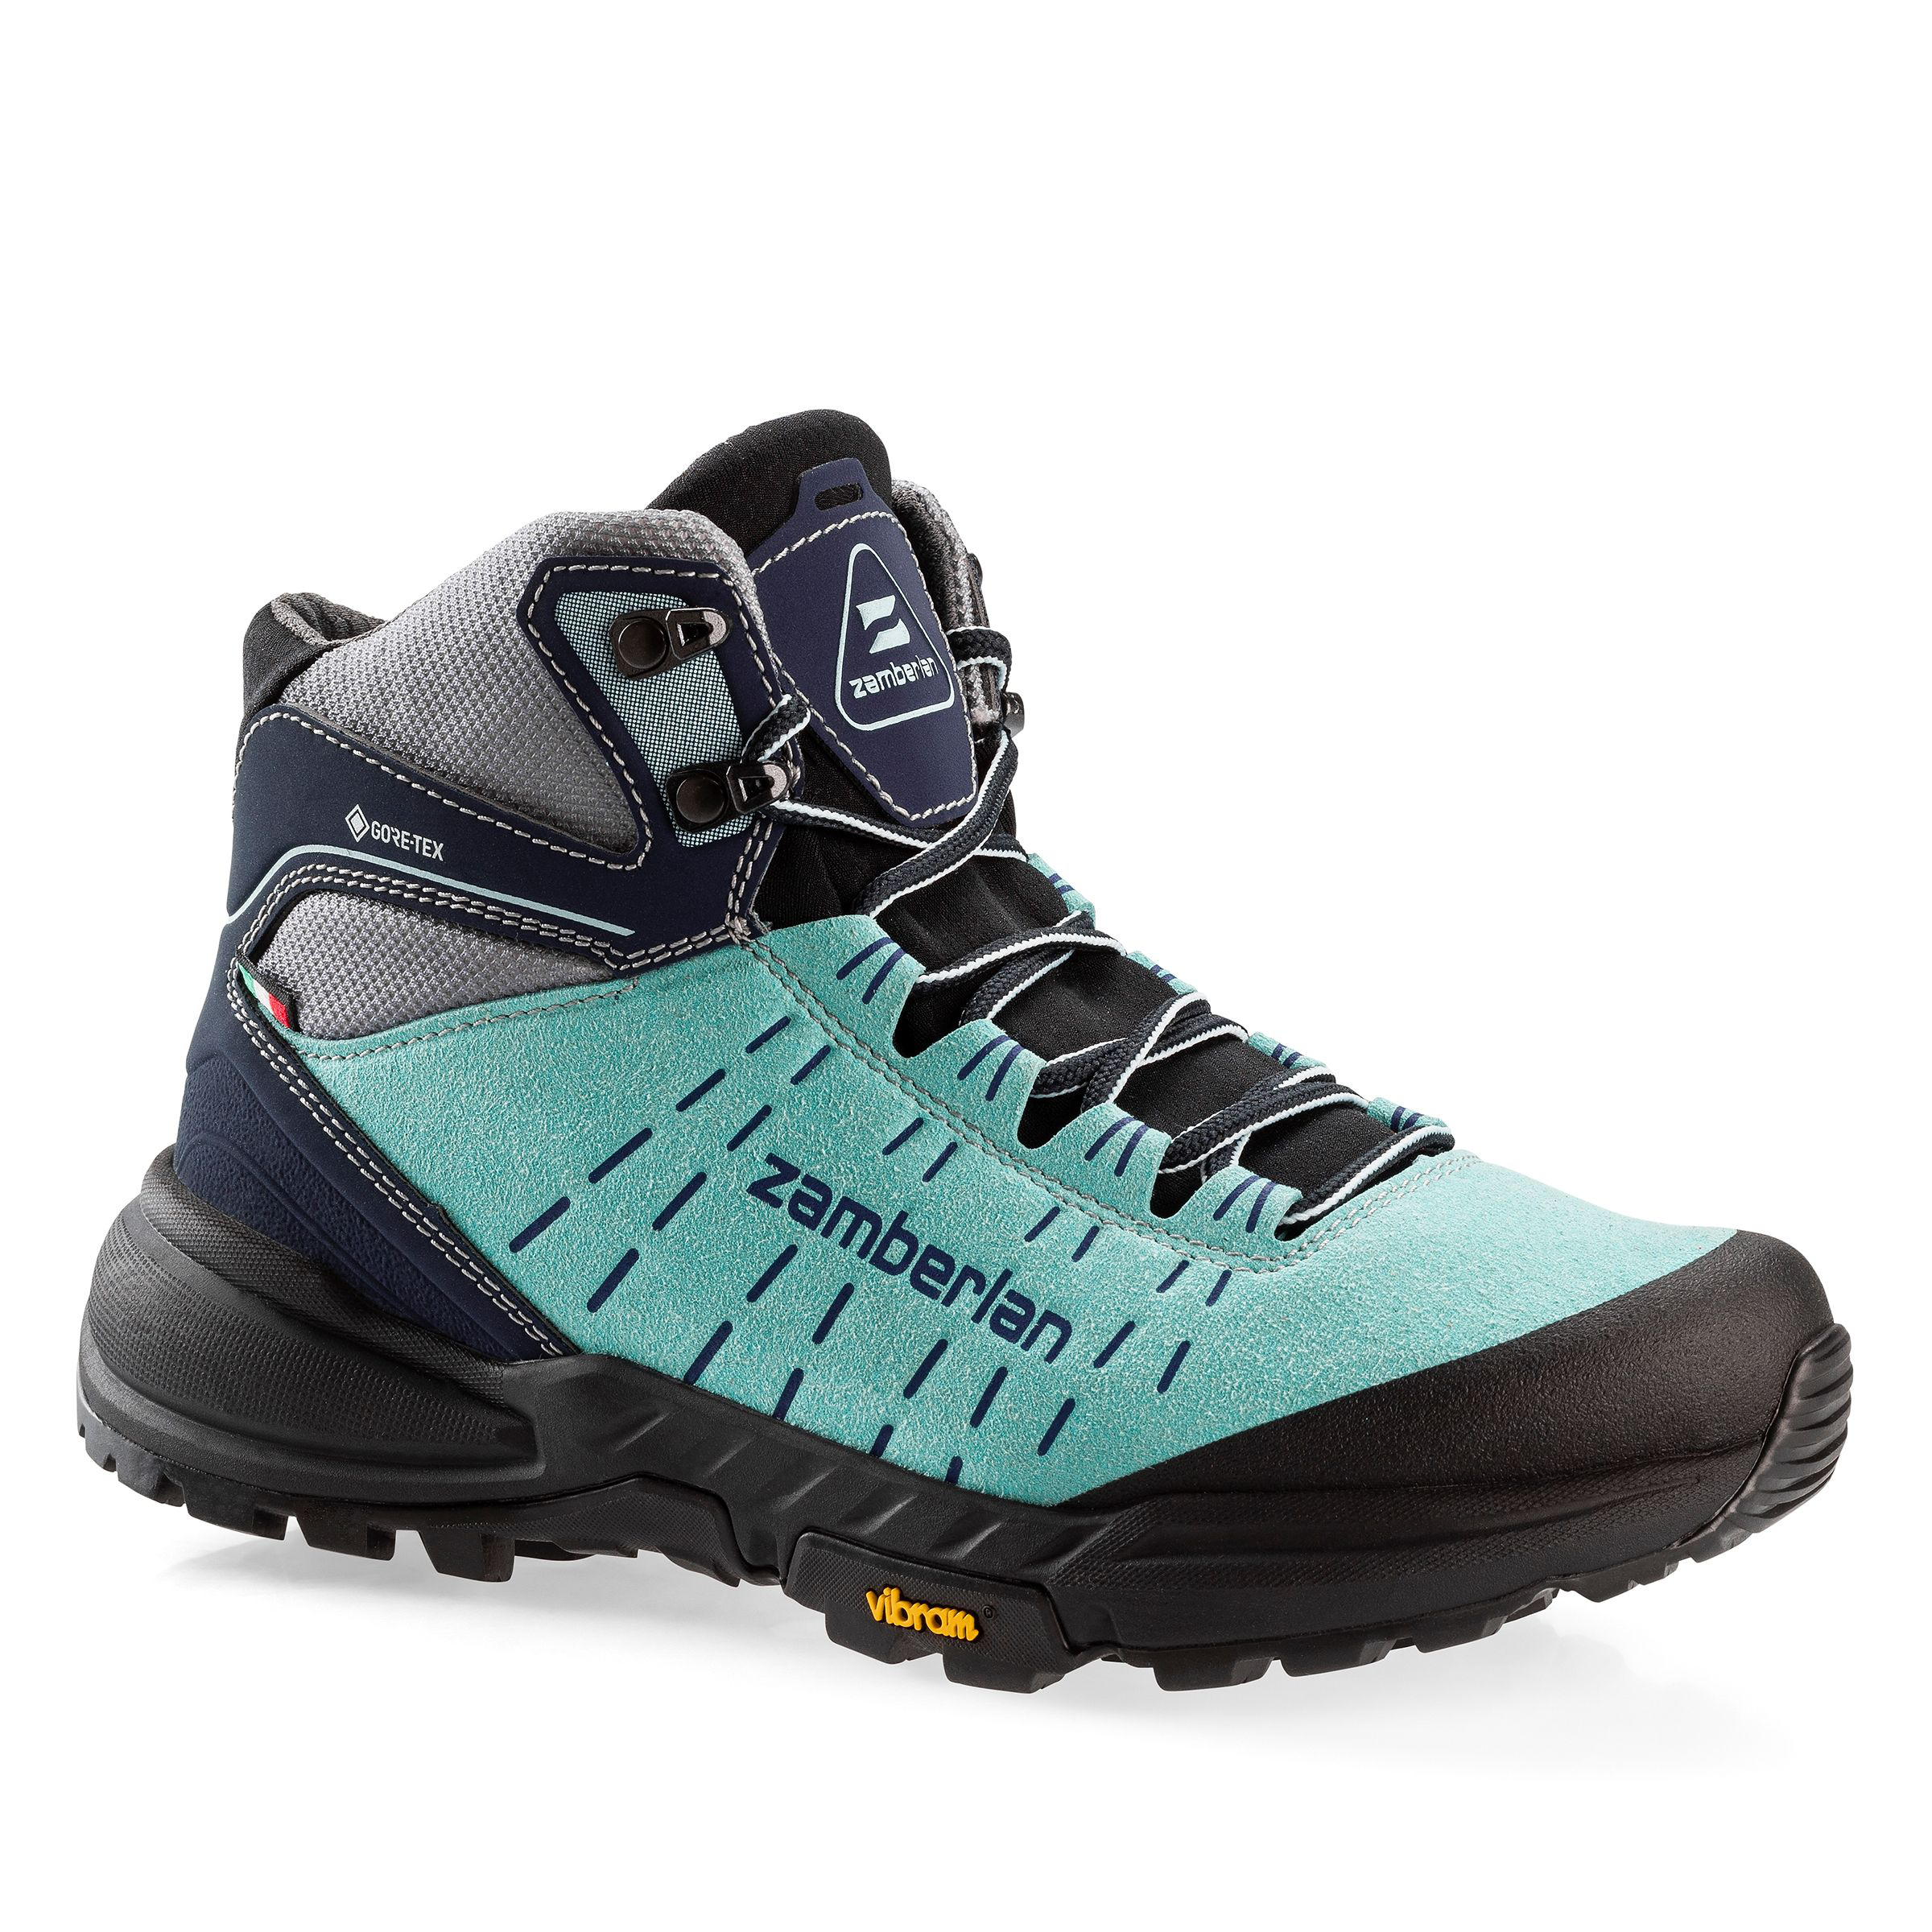 Zamberlan 334 Circe GTX Waterproof Hiking Boots for Ladies - Blue - 8.5M